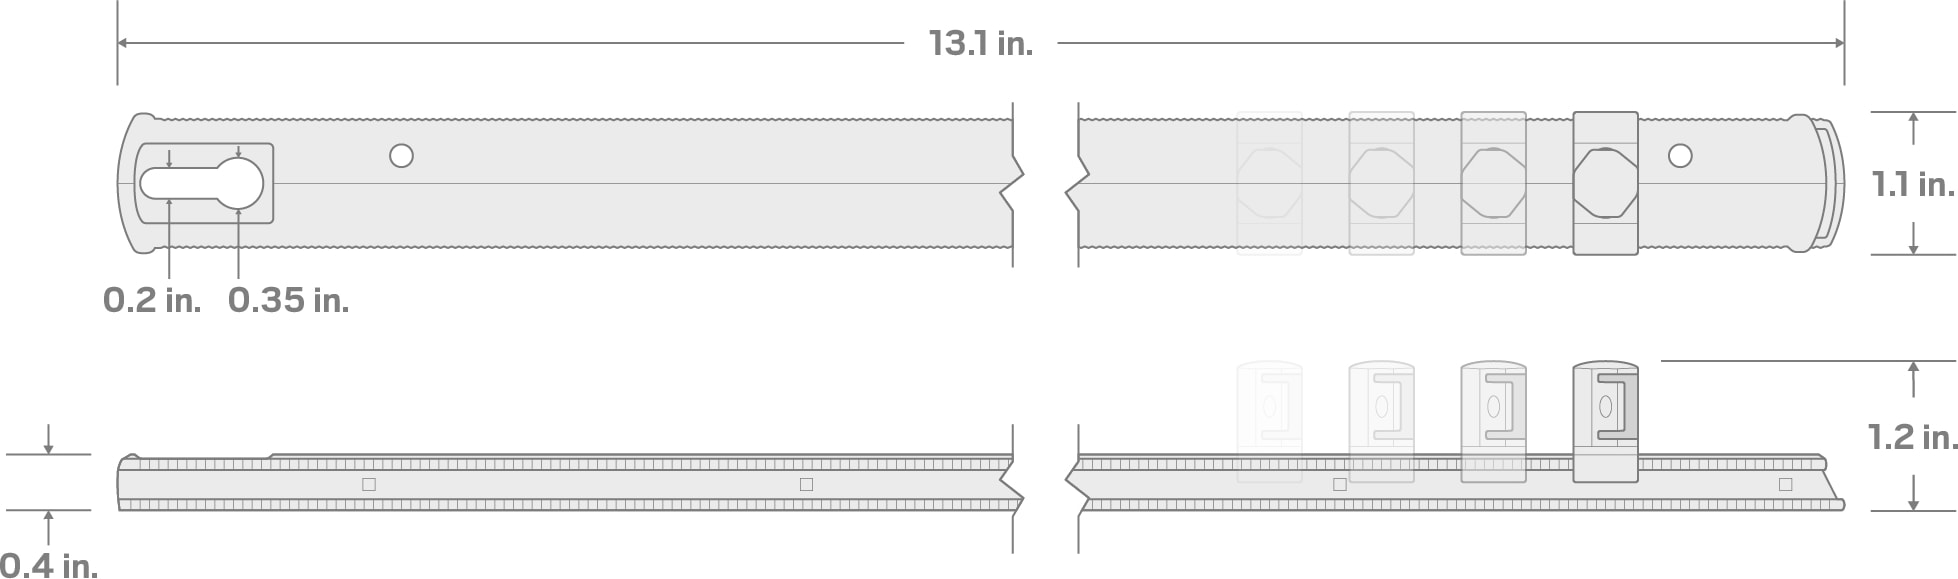 Specs for 1/2 Inch Drive x 13 Inch Socket Rail, 10 Clips (Black)